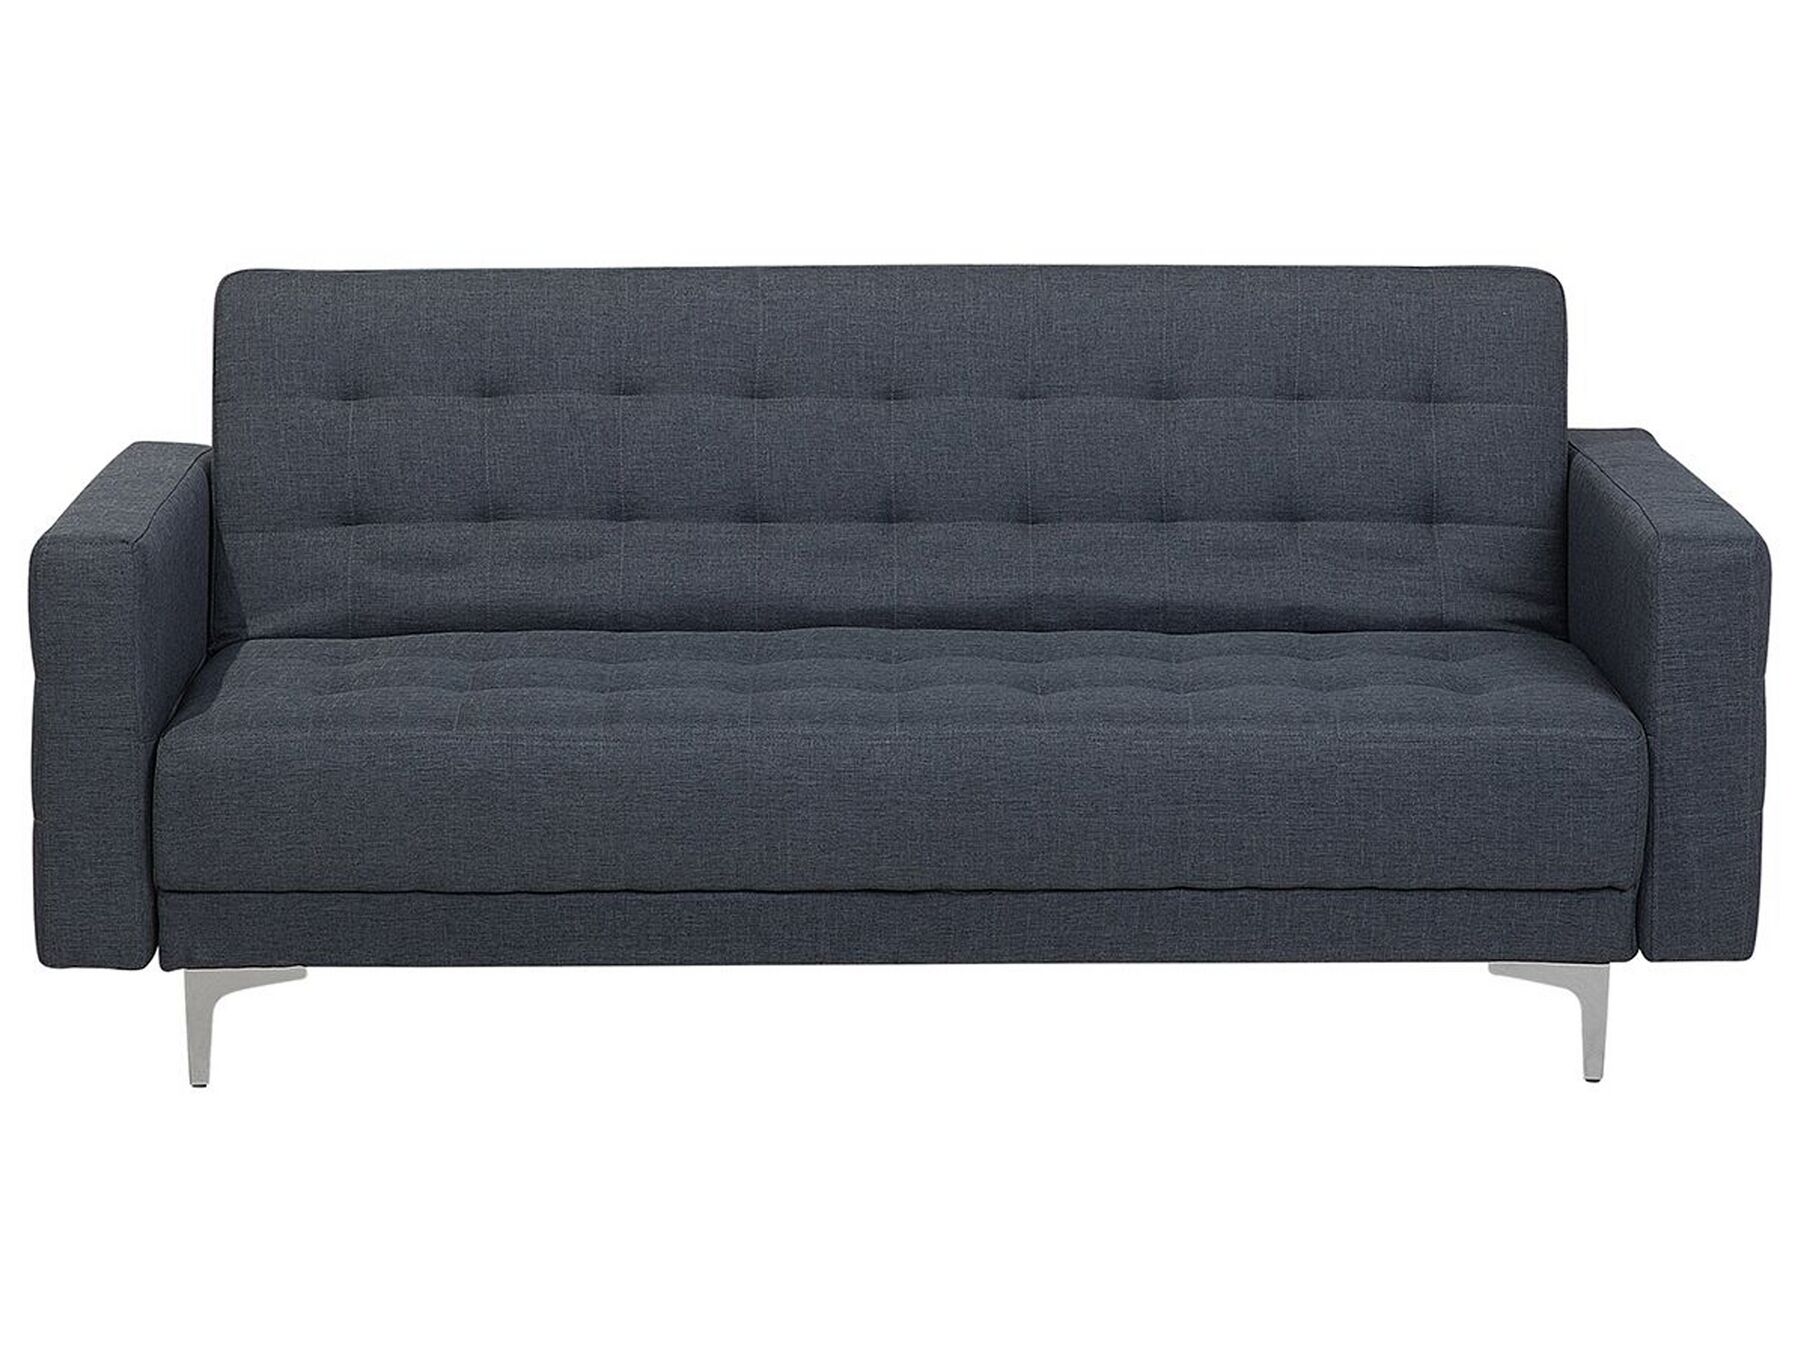 Modern 3 Seater Sofa Bed Dark Grey Fabric Reclining Tufted Aberdeen